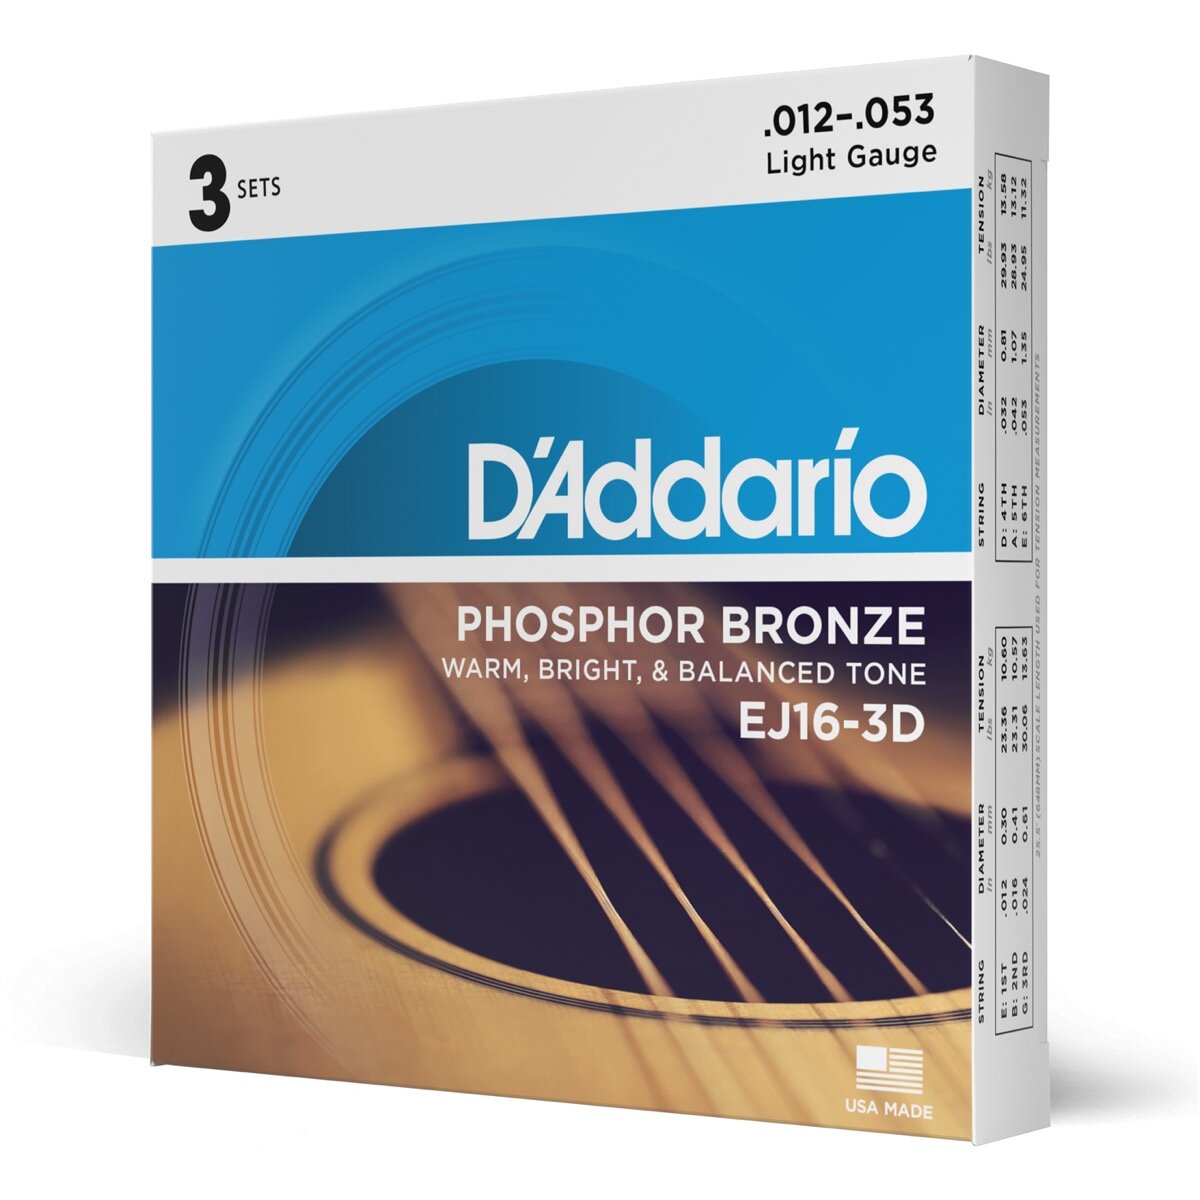 DAddario EJ16 Pho Bronz Aco Gtr Strings Lt 3 PK -  D'Addario, EJ16-3D